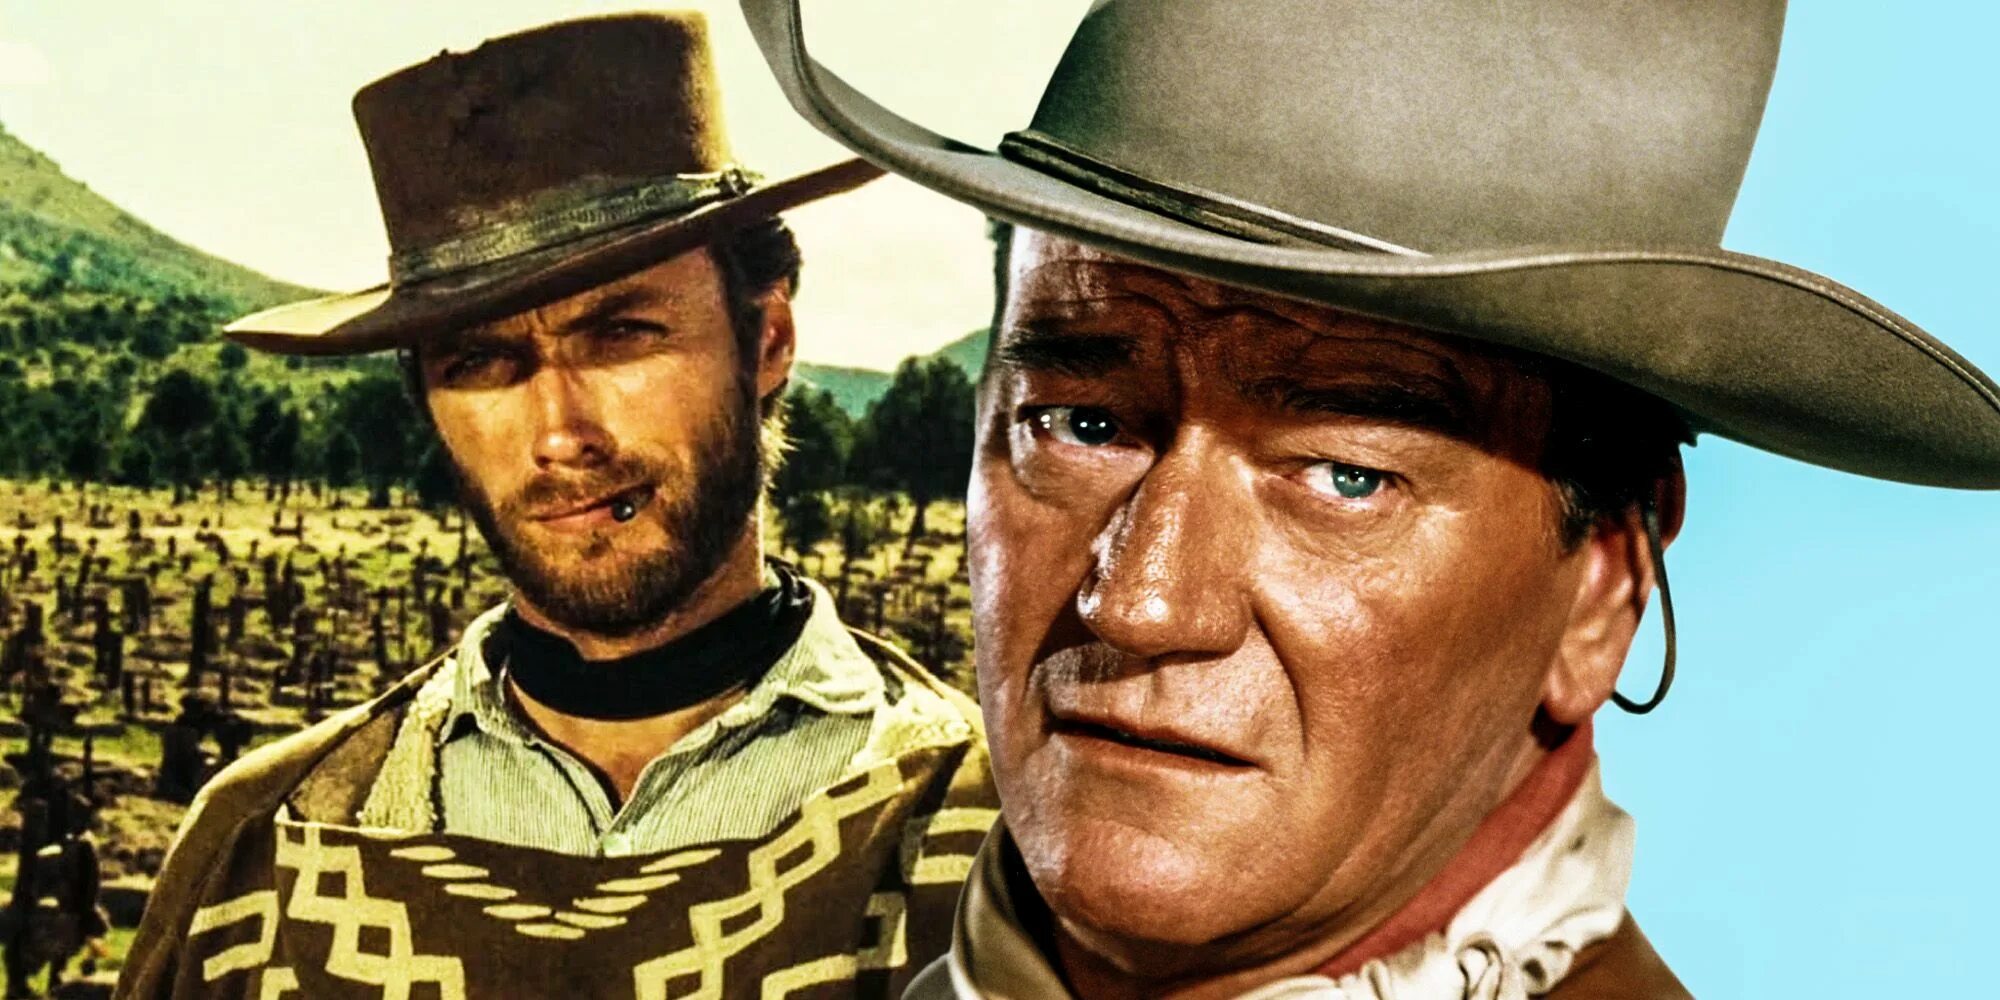 40 50 годы вестерны. Клинт Иствуд 1965. John Wayne. Джон Уэйн и Клинт Иствуд. Клинт Иствуд дикий Запад.